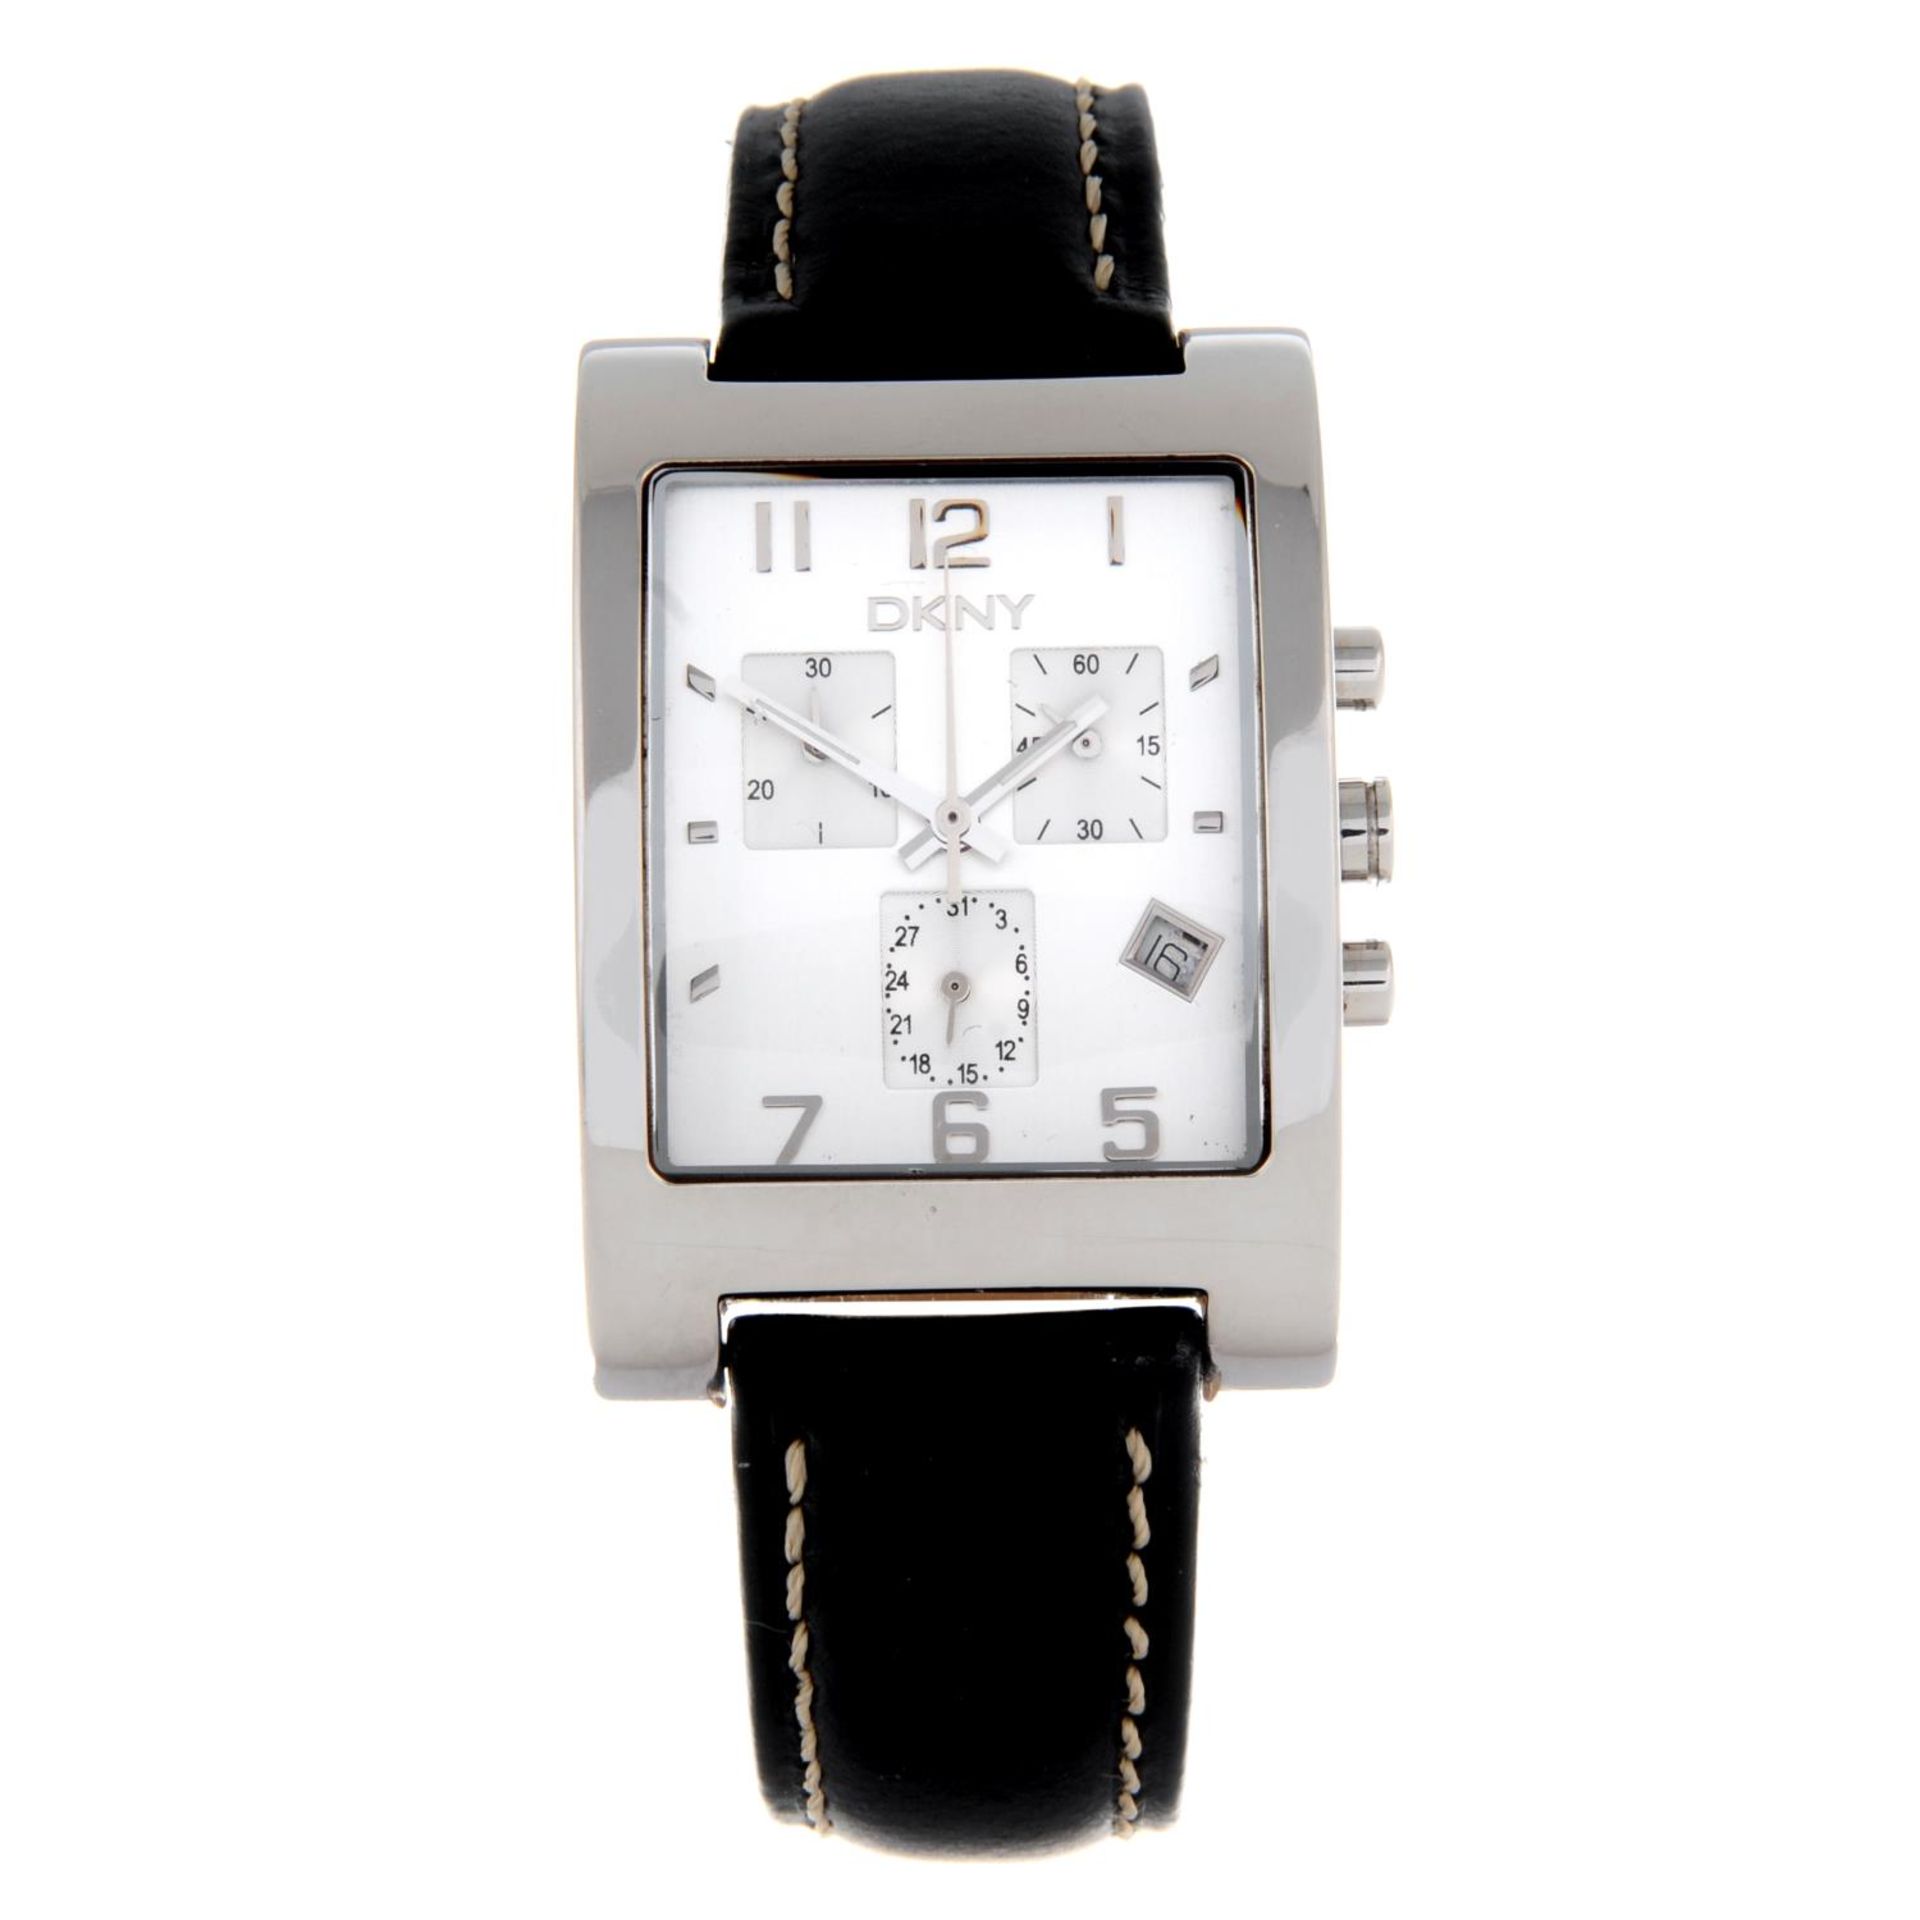 DKNY - a chronograph wrist watch.